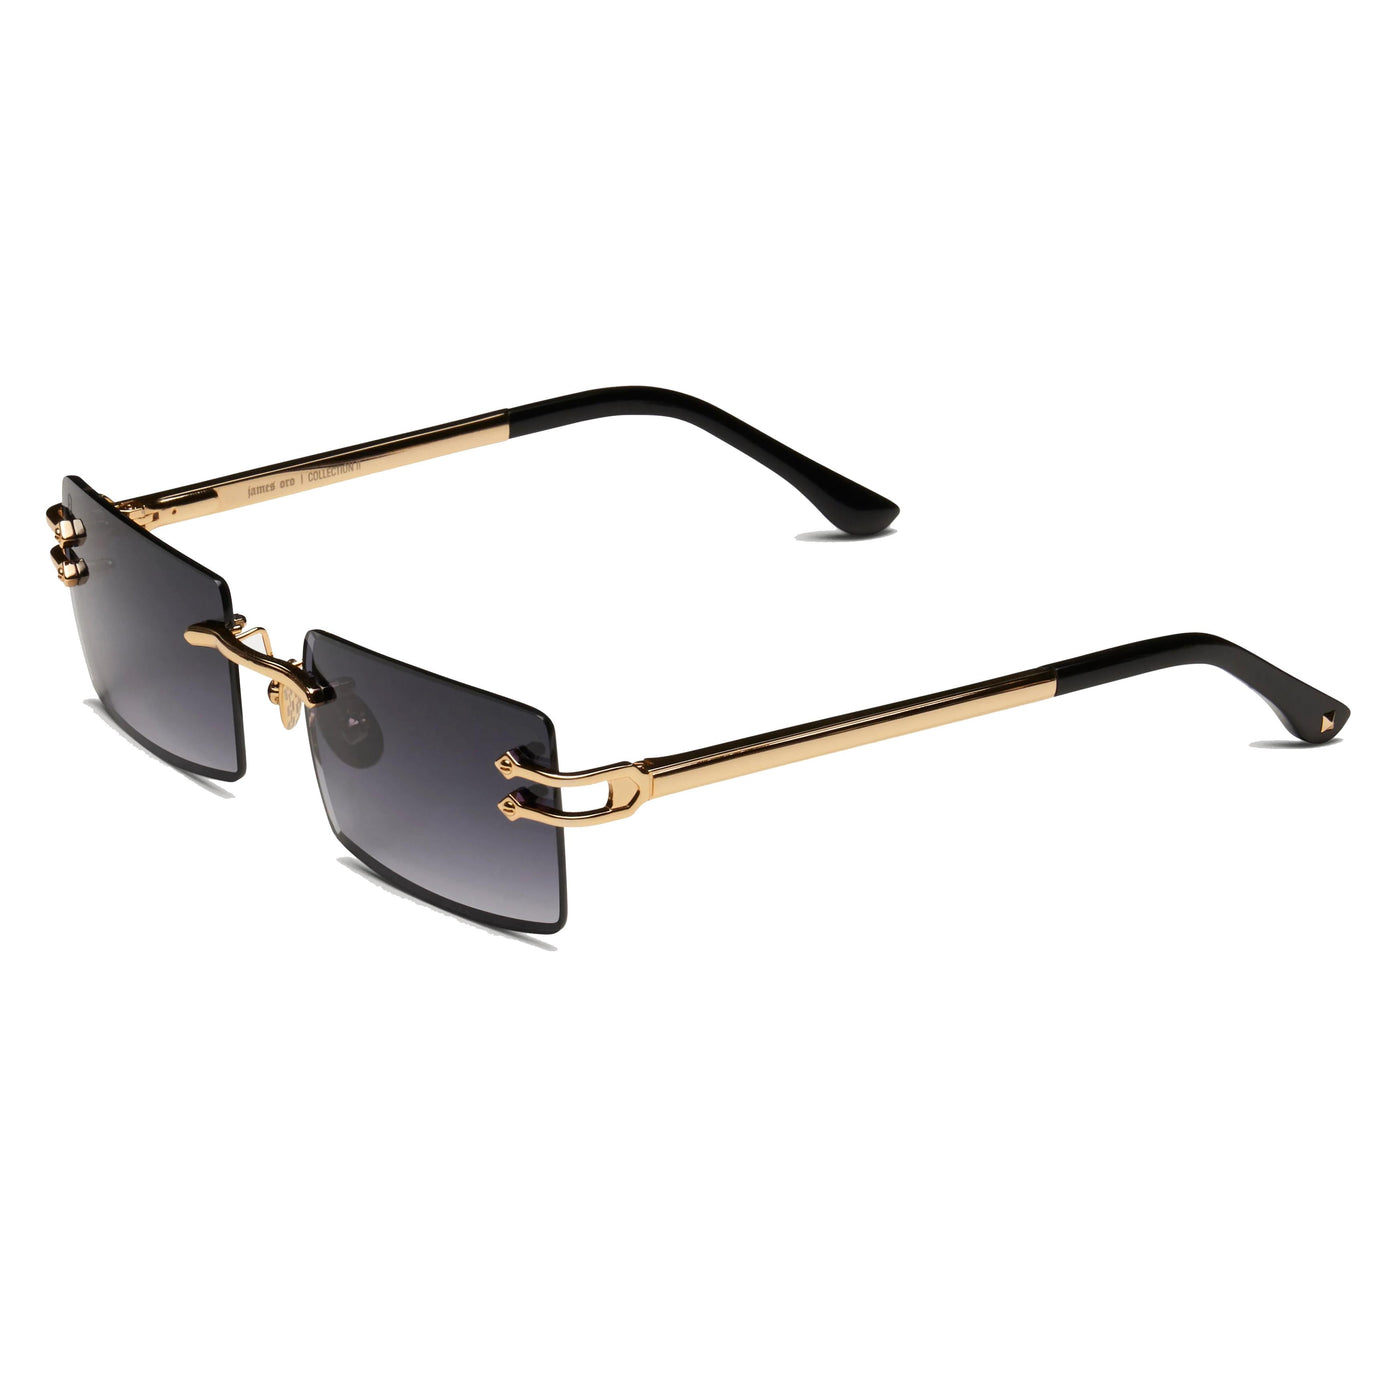 James Oro PHANTOM AUTHENTIC-Sunglasses-Topline Eyewear